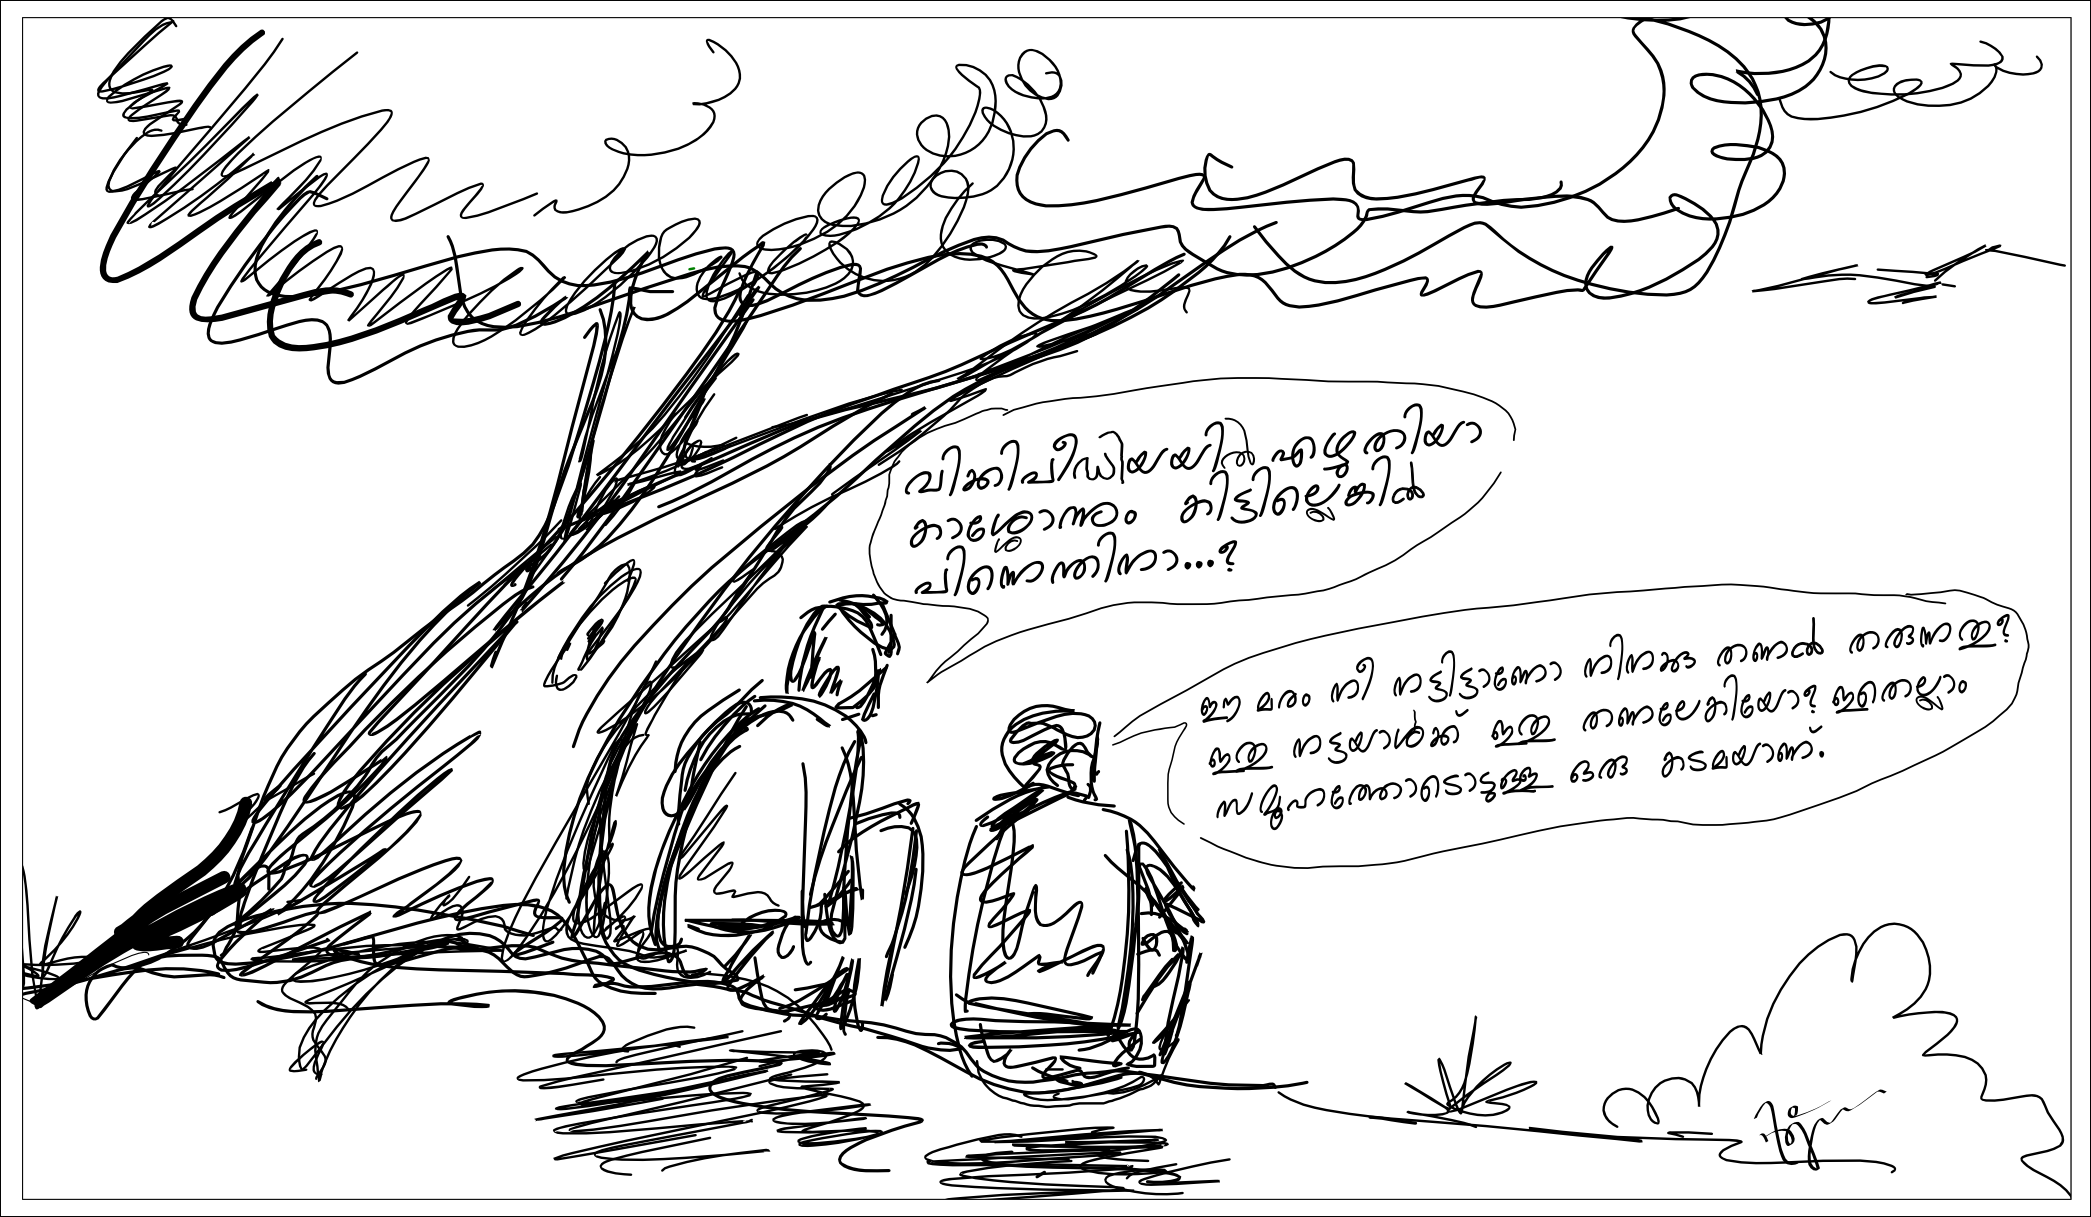 Malayalam cartoon drawn for Wikipedia